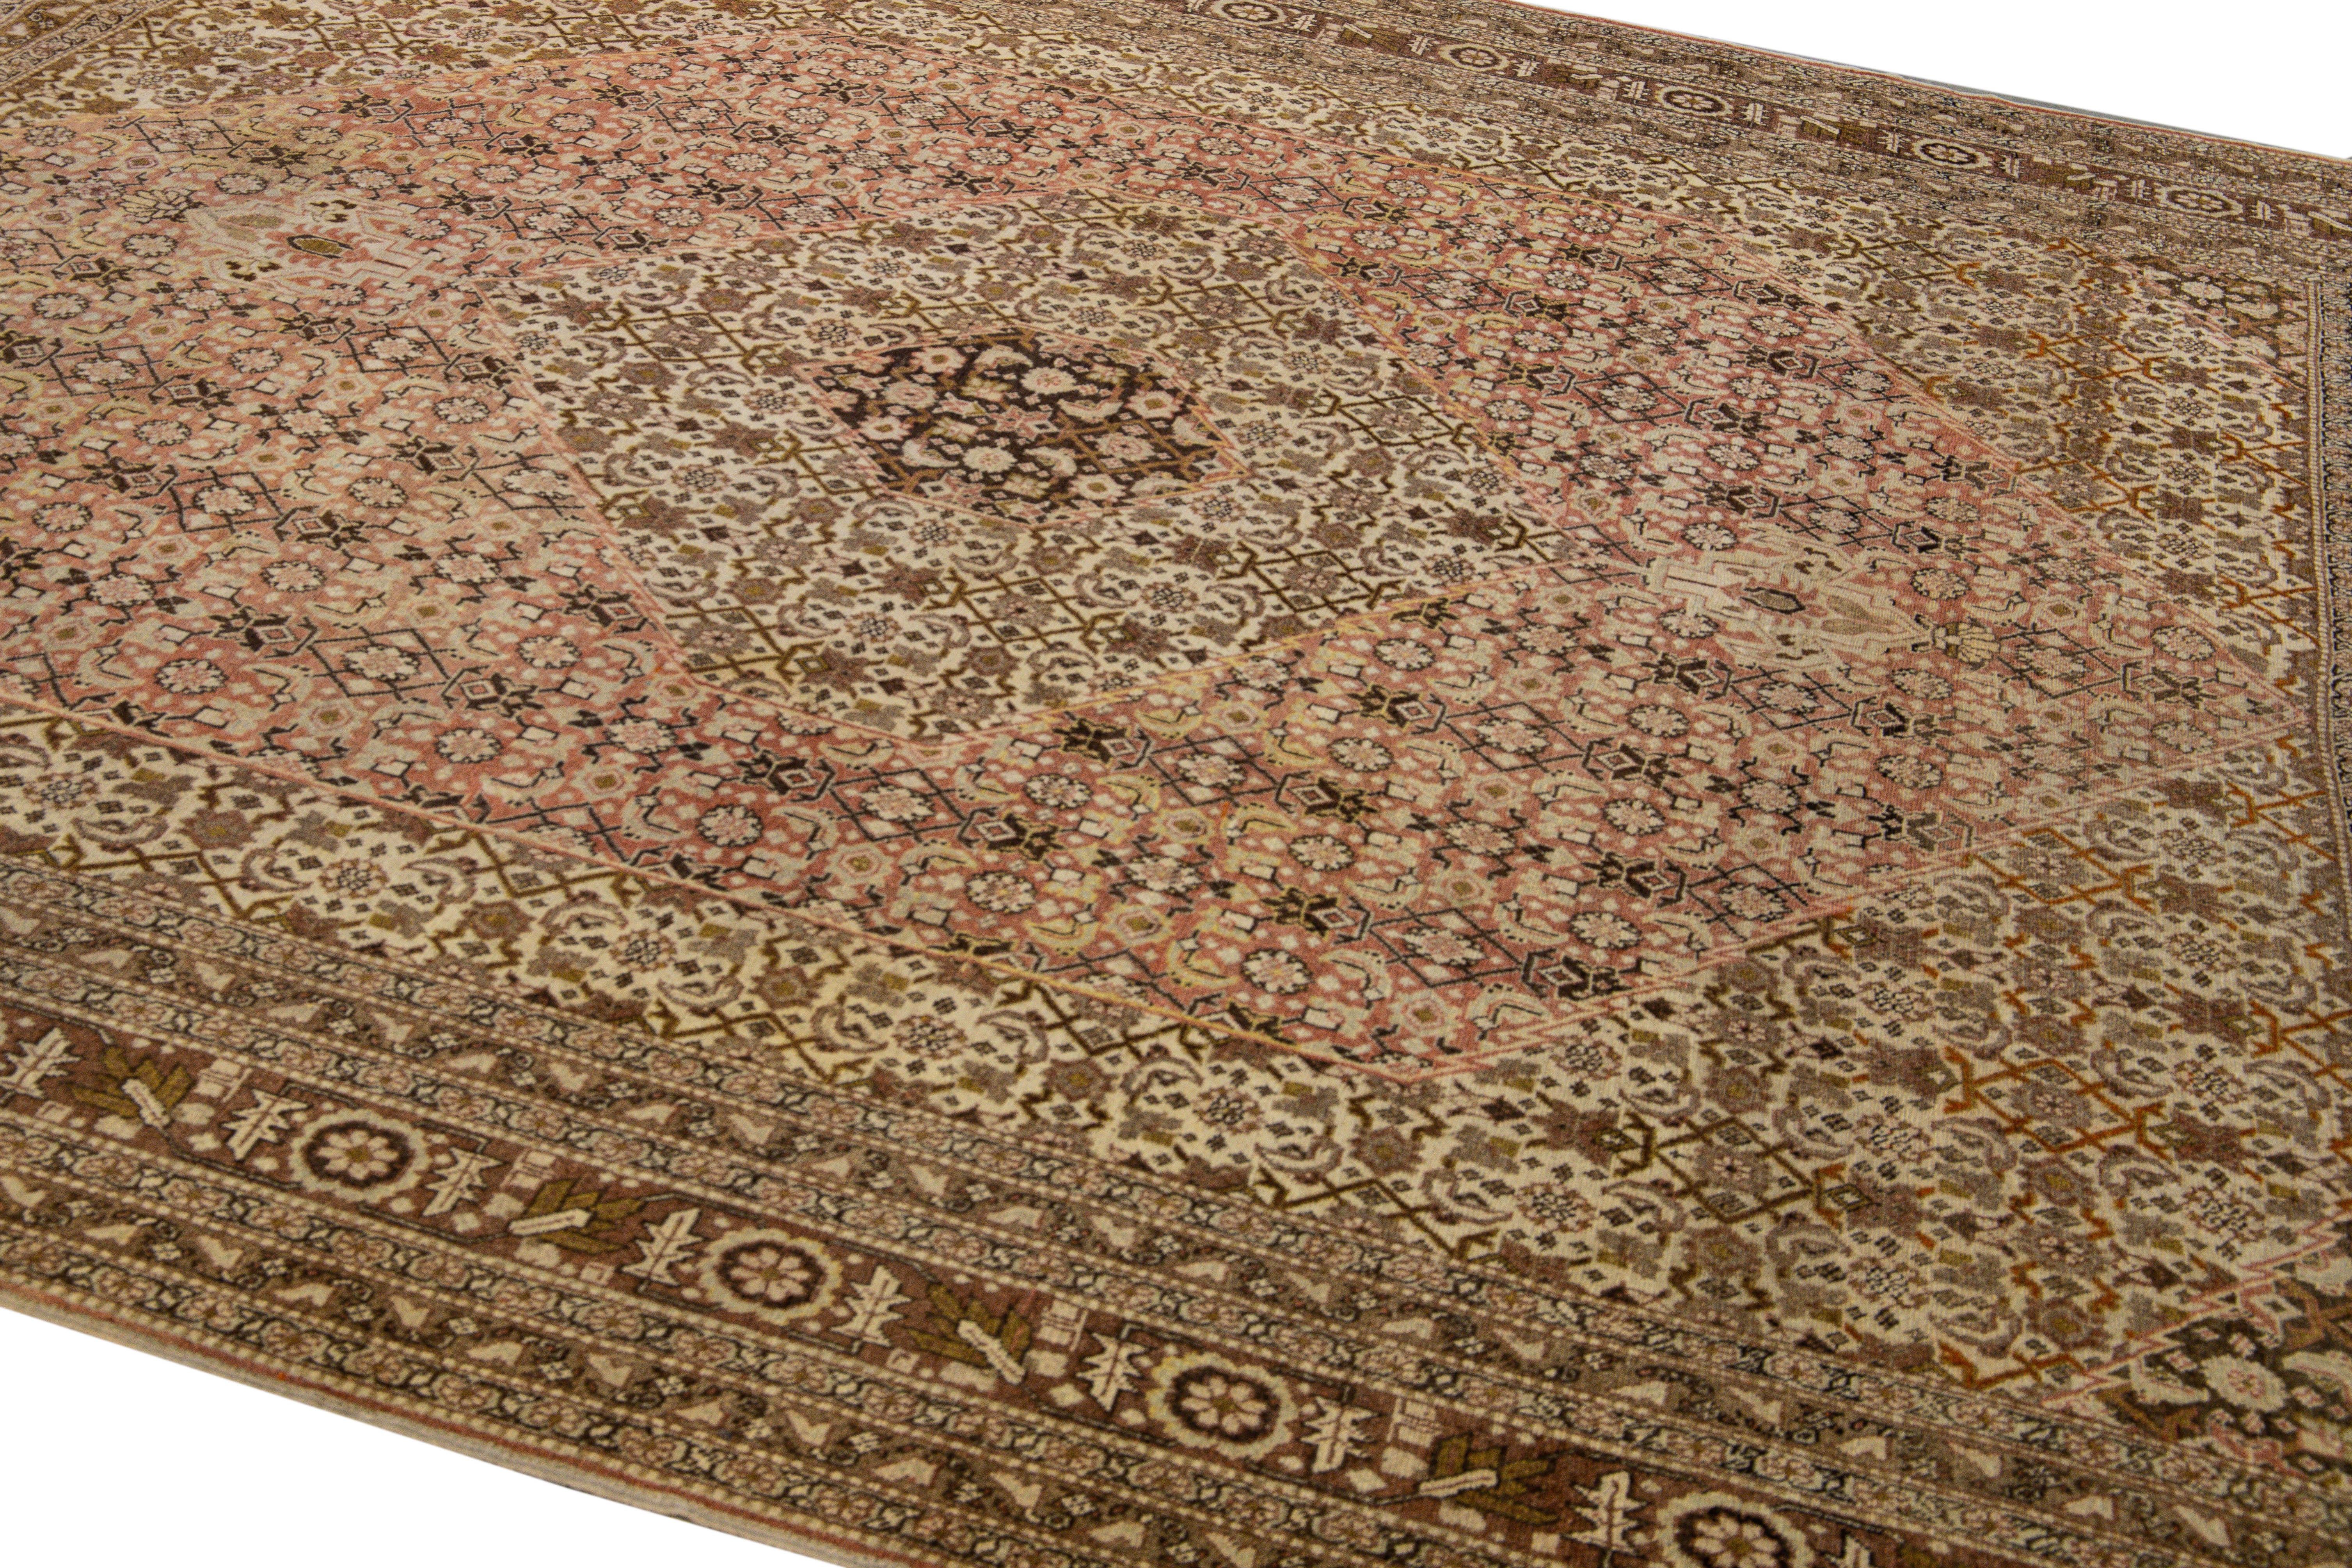 Antique Tabriz Beige and Brown Handmade All-over Designed Wool Rug For Sale 2